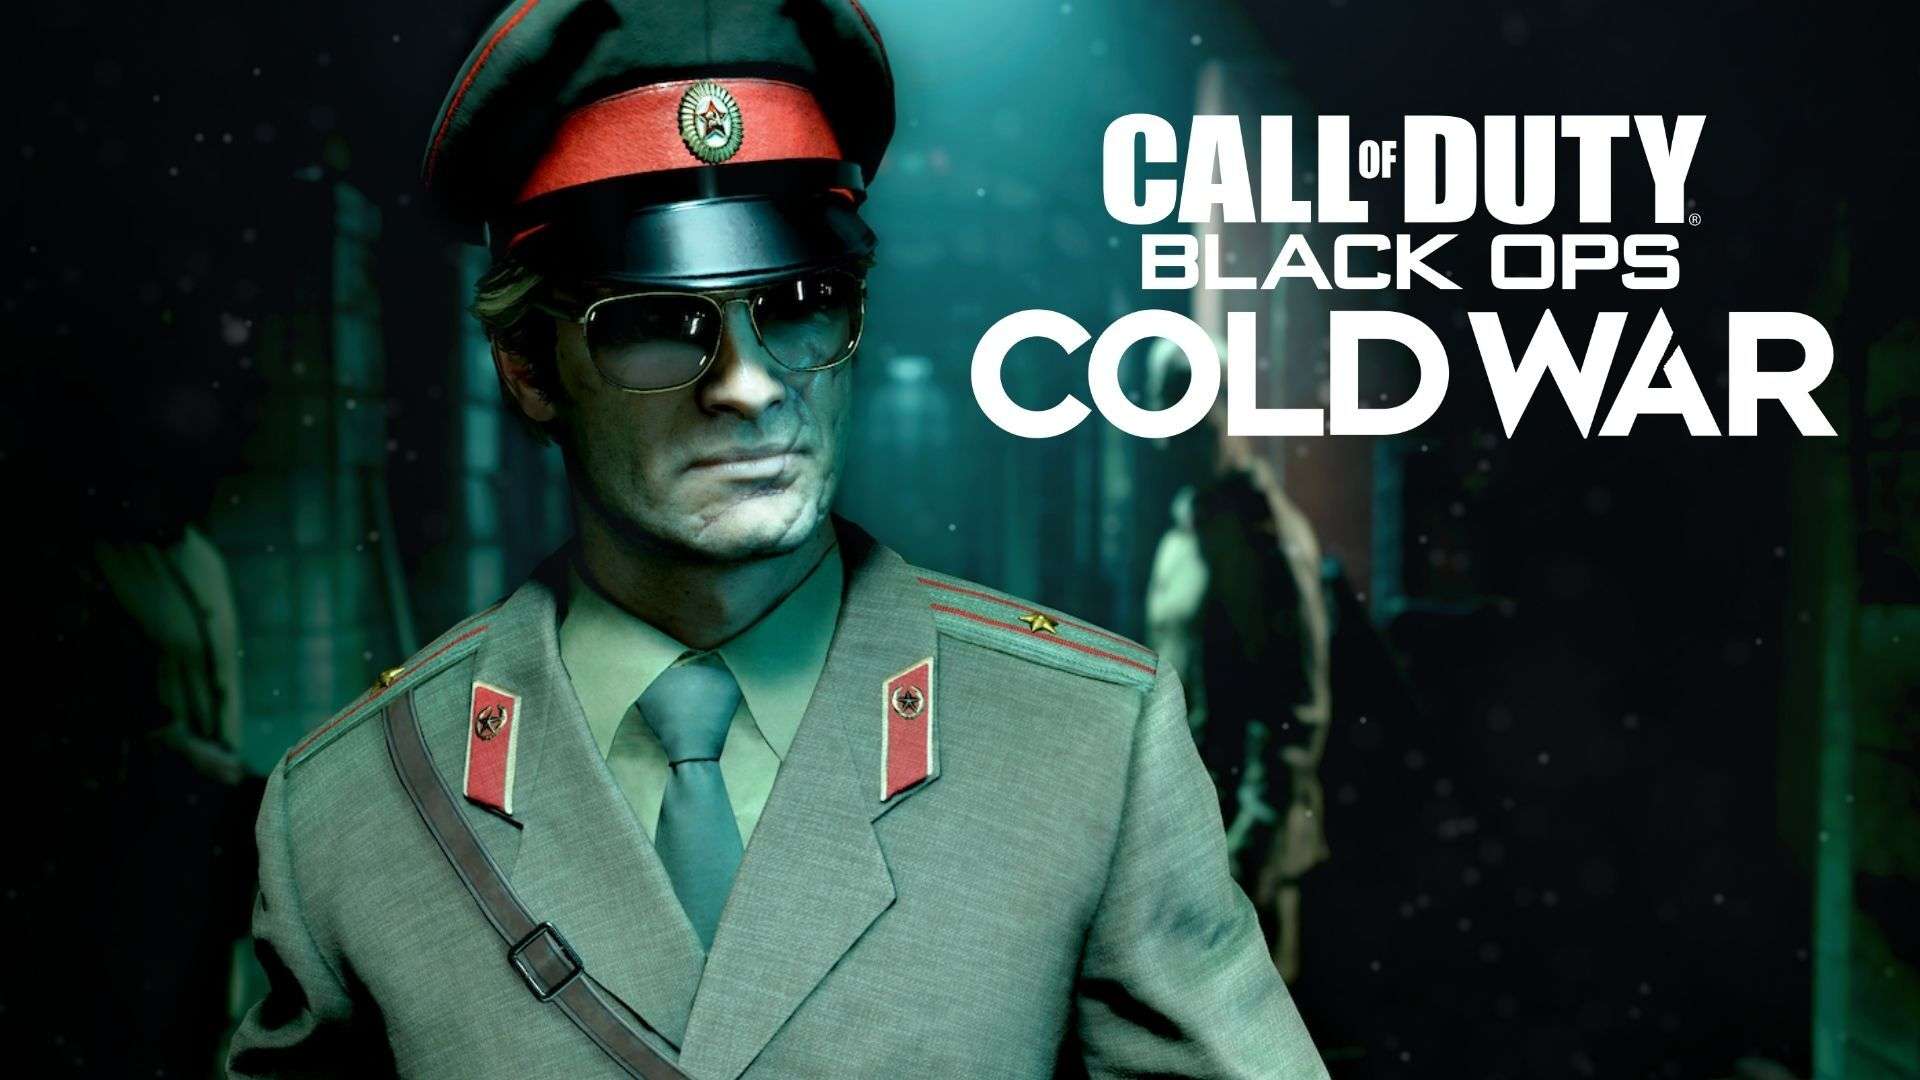 Black Ops Cold War campaign